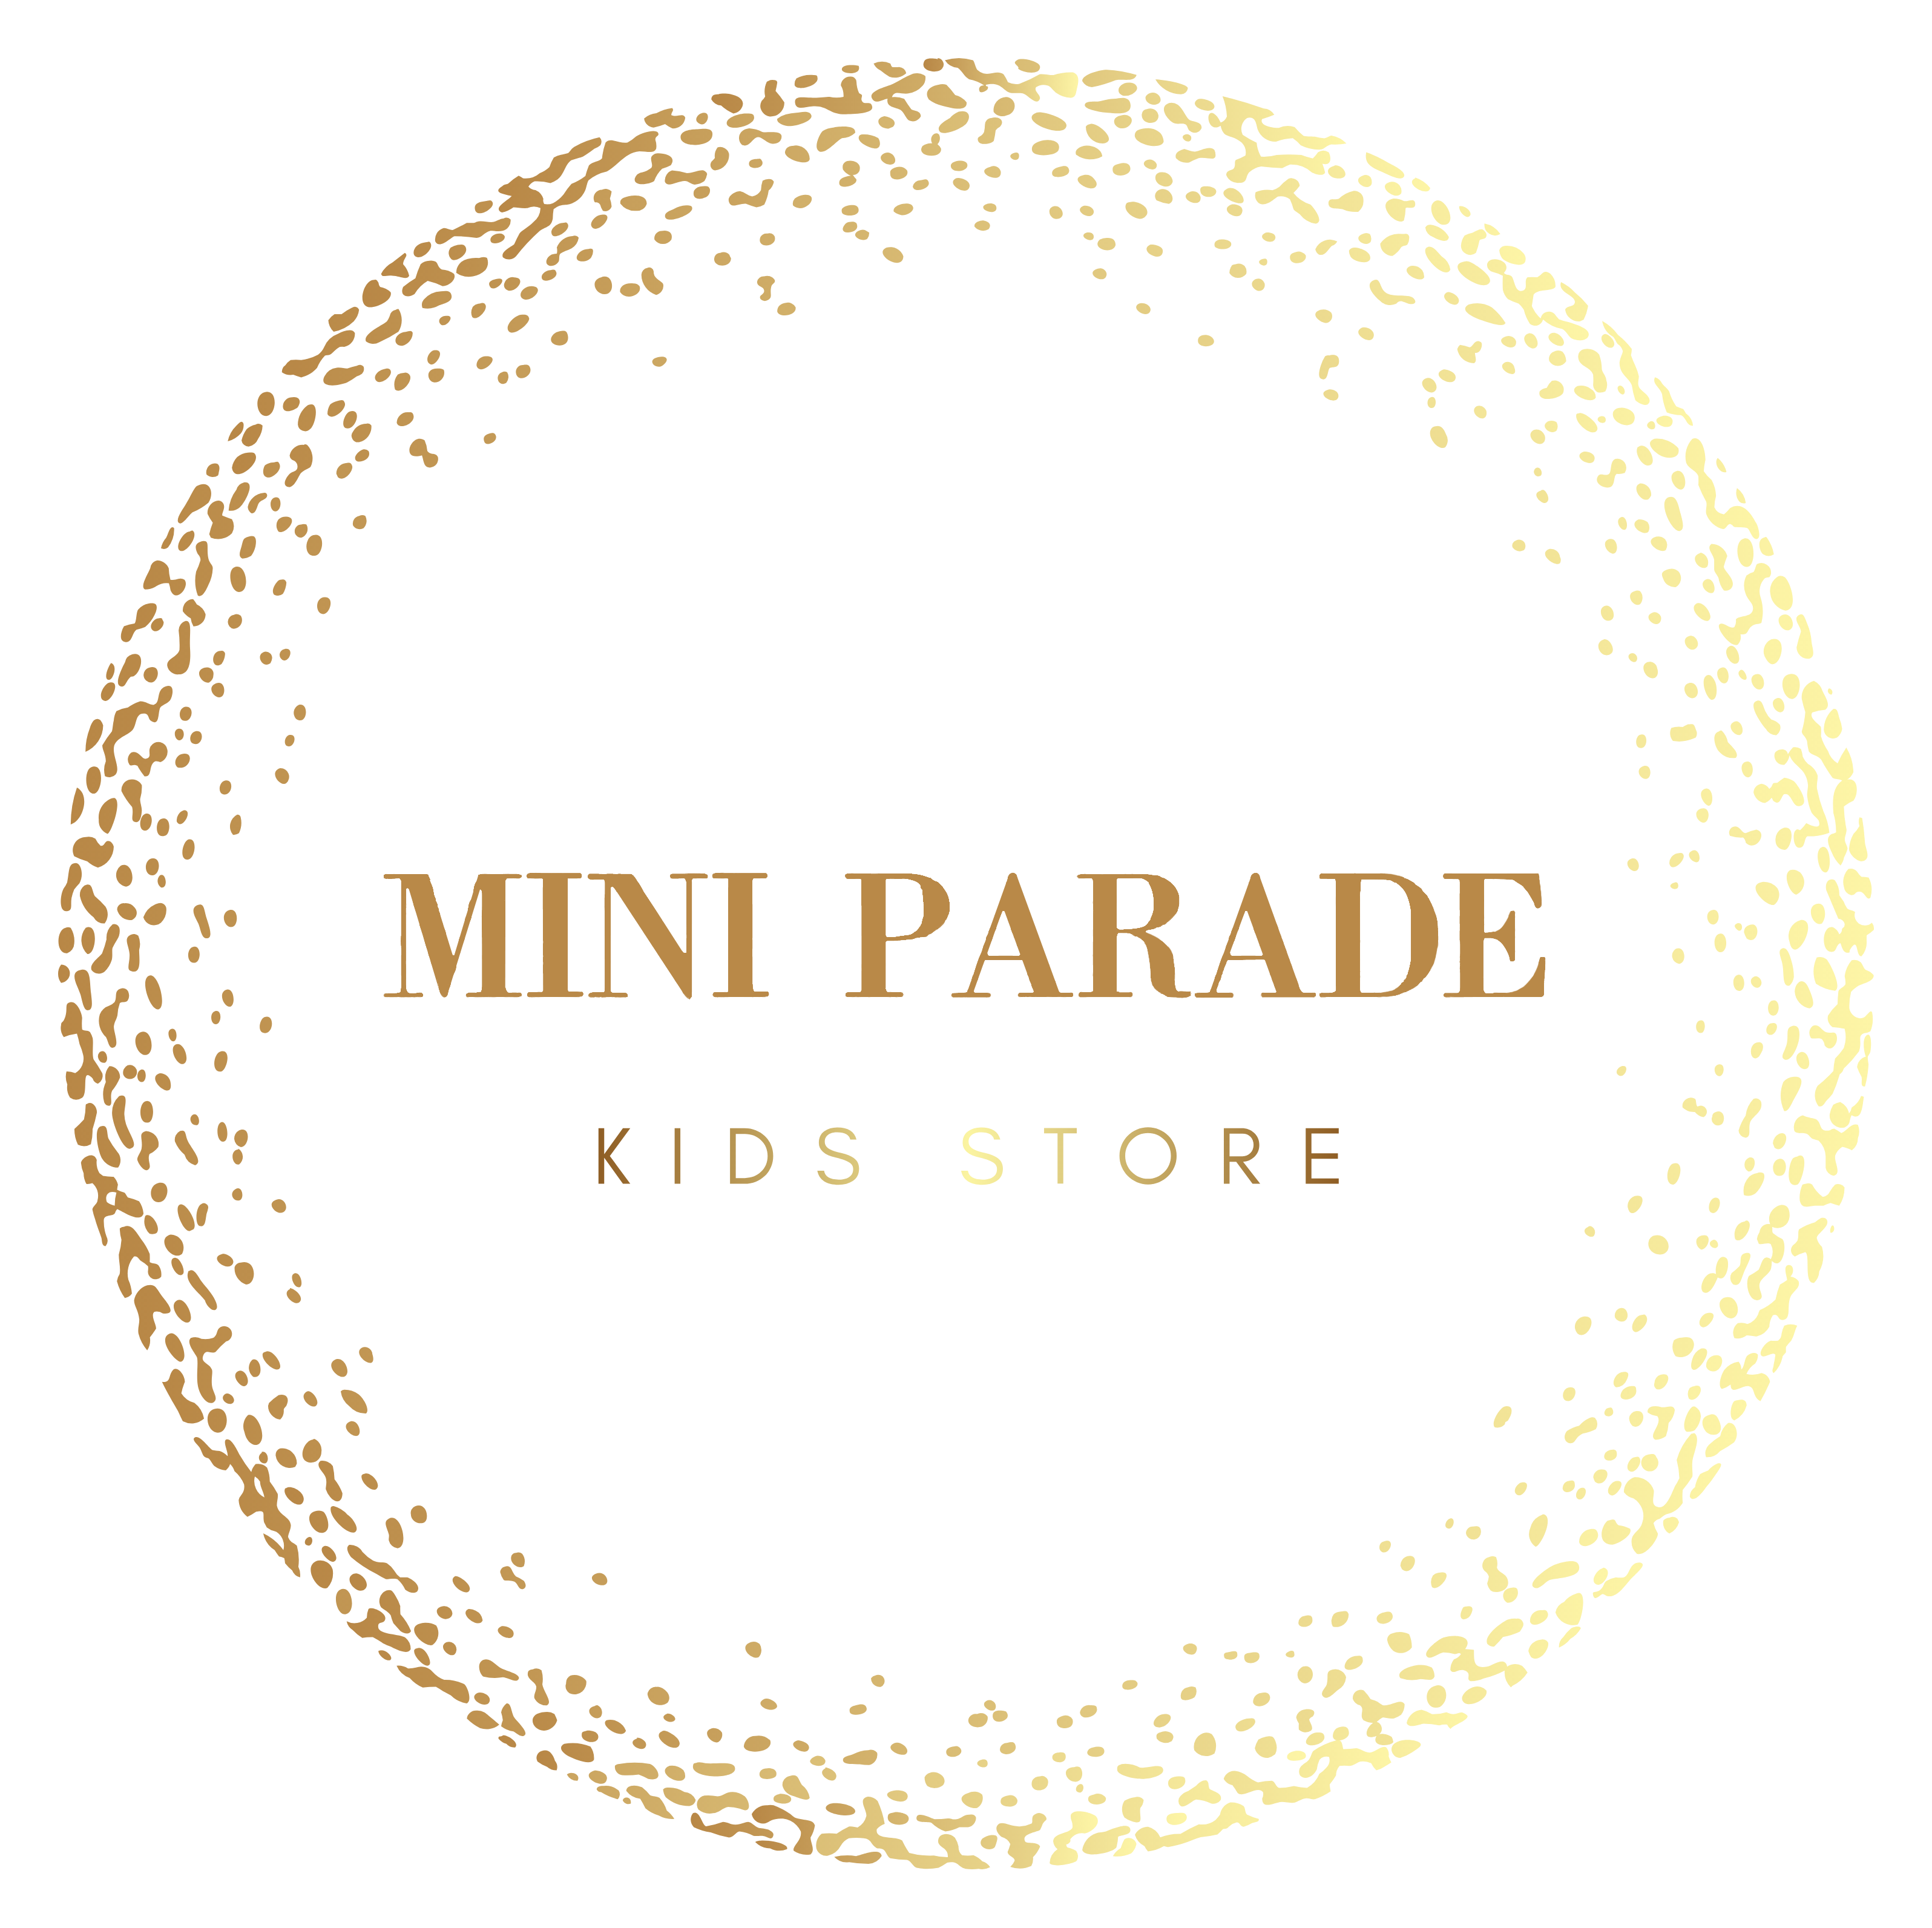 Mini Parade